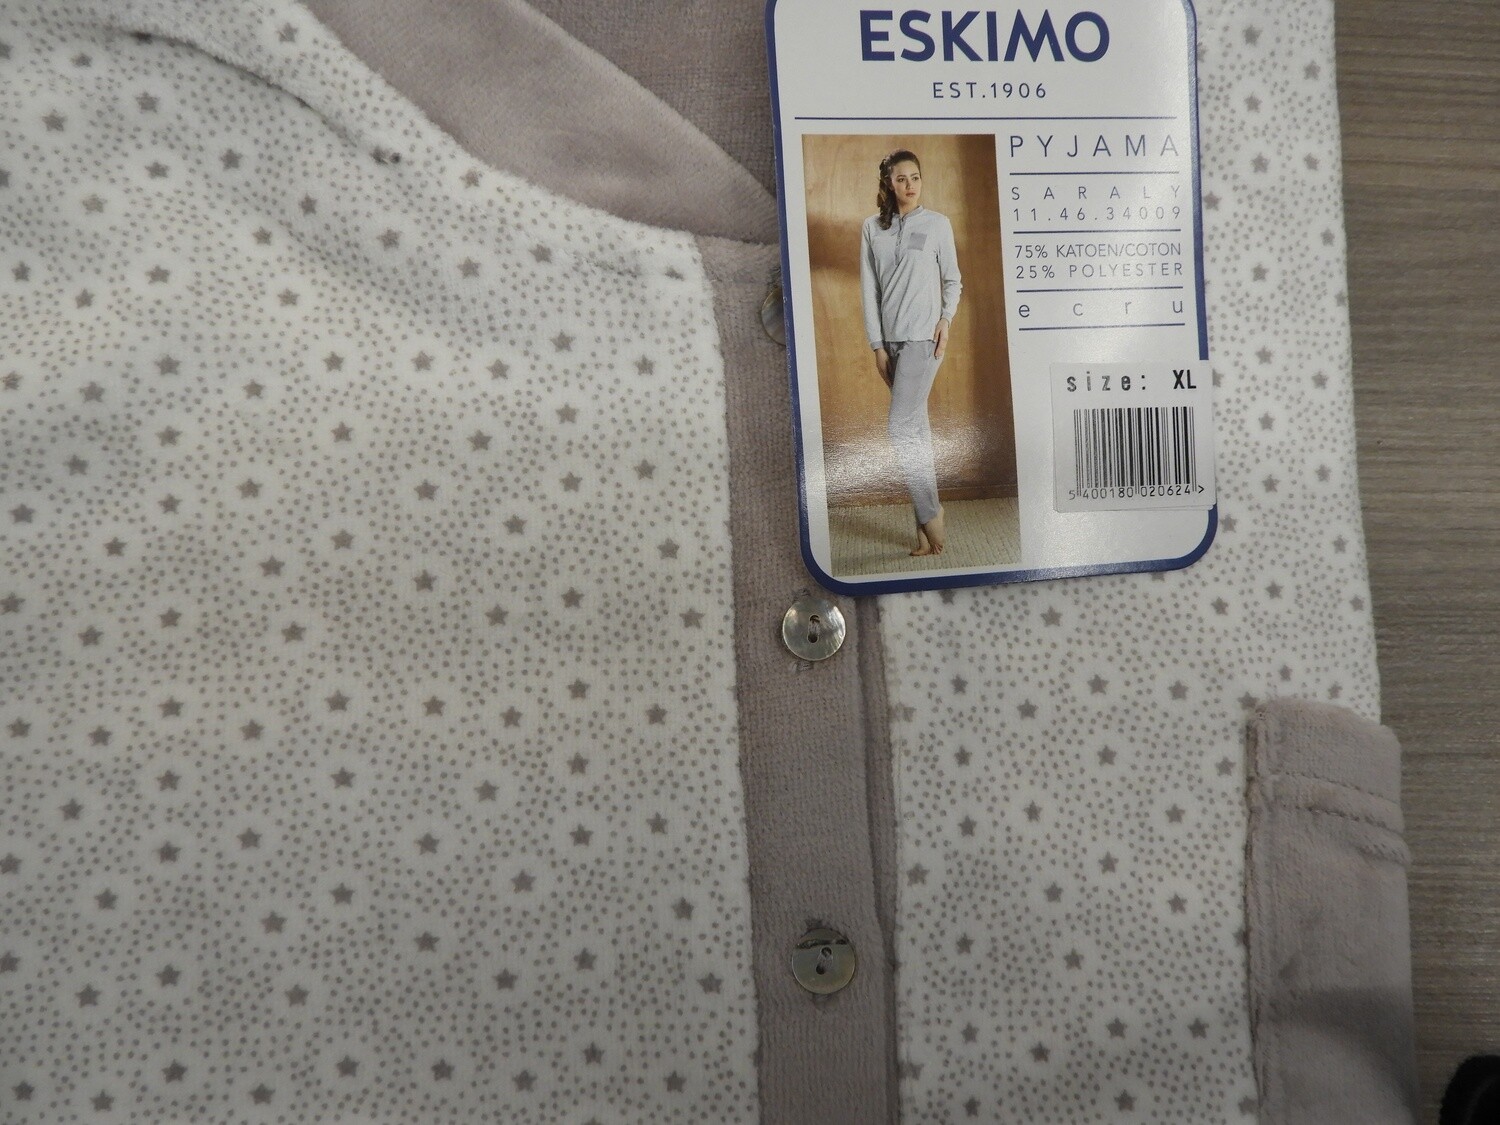 Eskimo Dames pyjama: Saraly Beige Velours